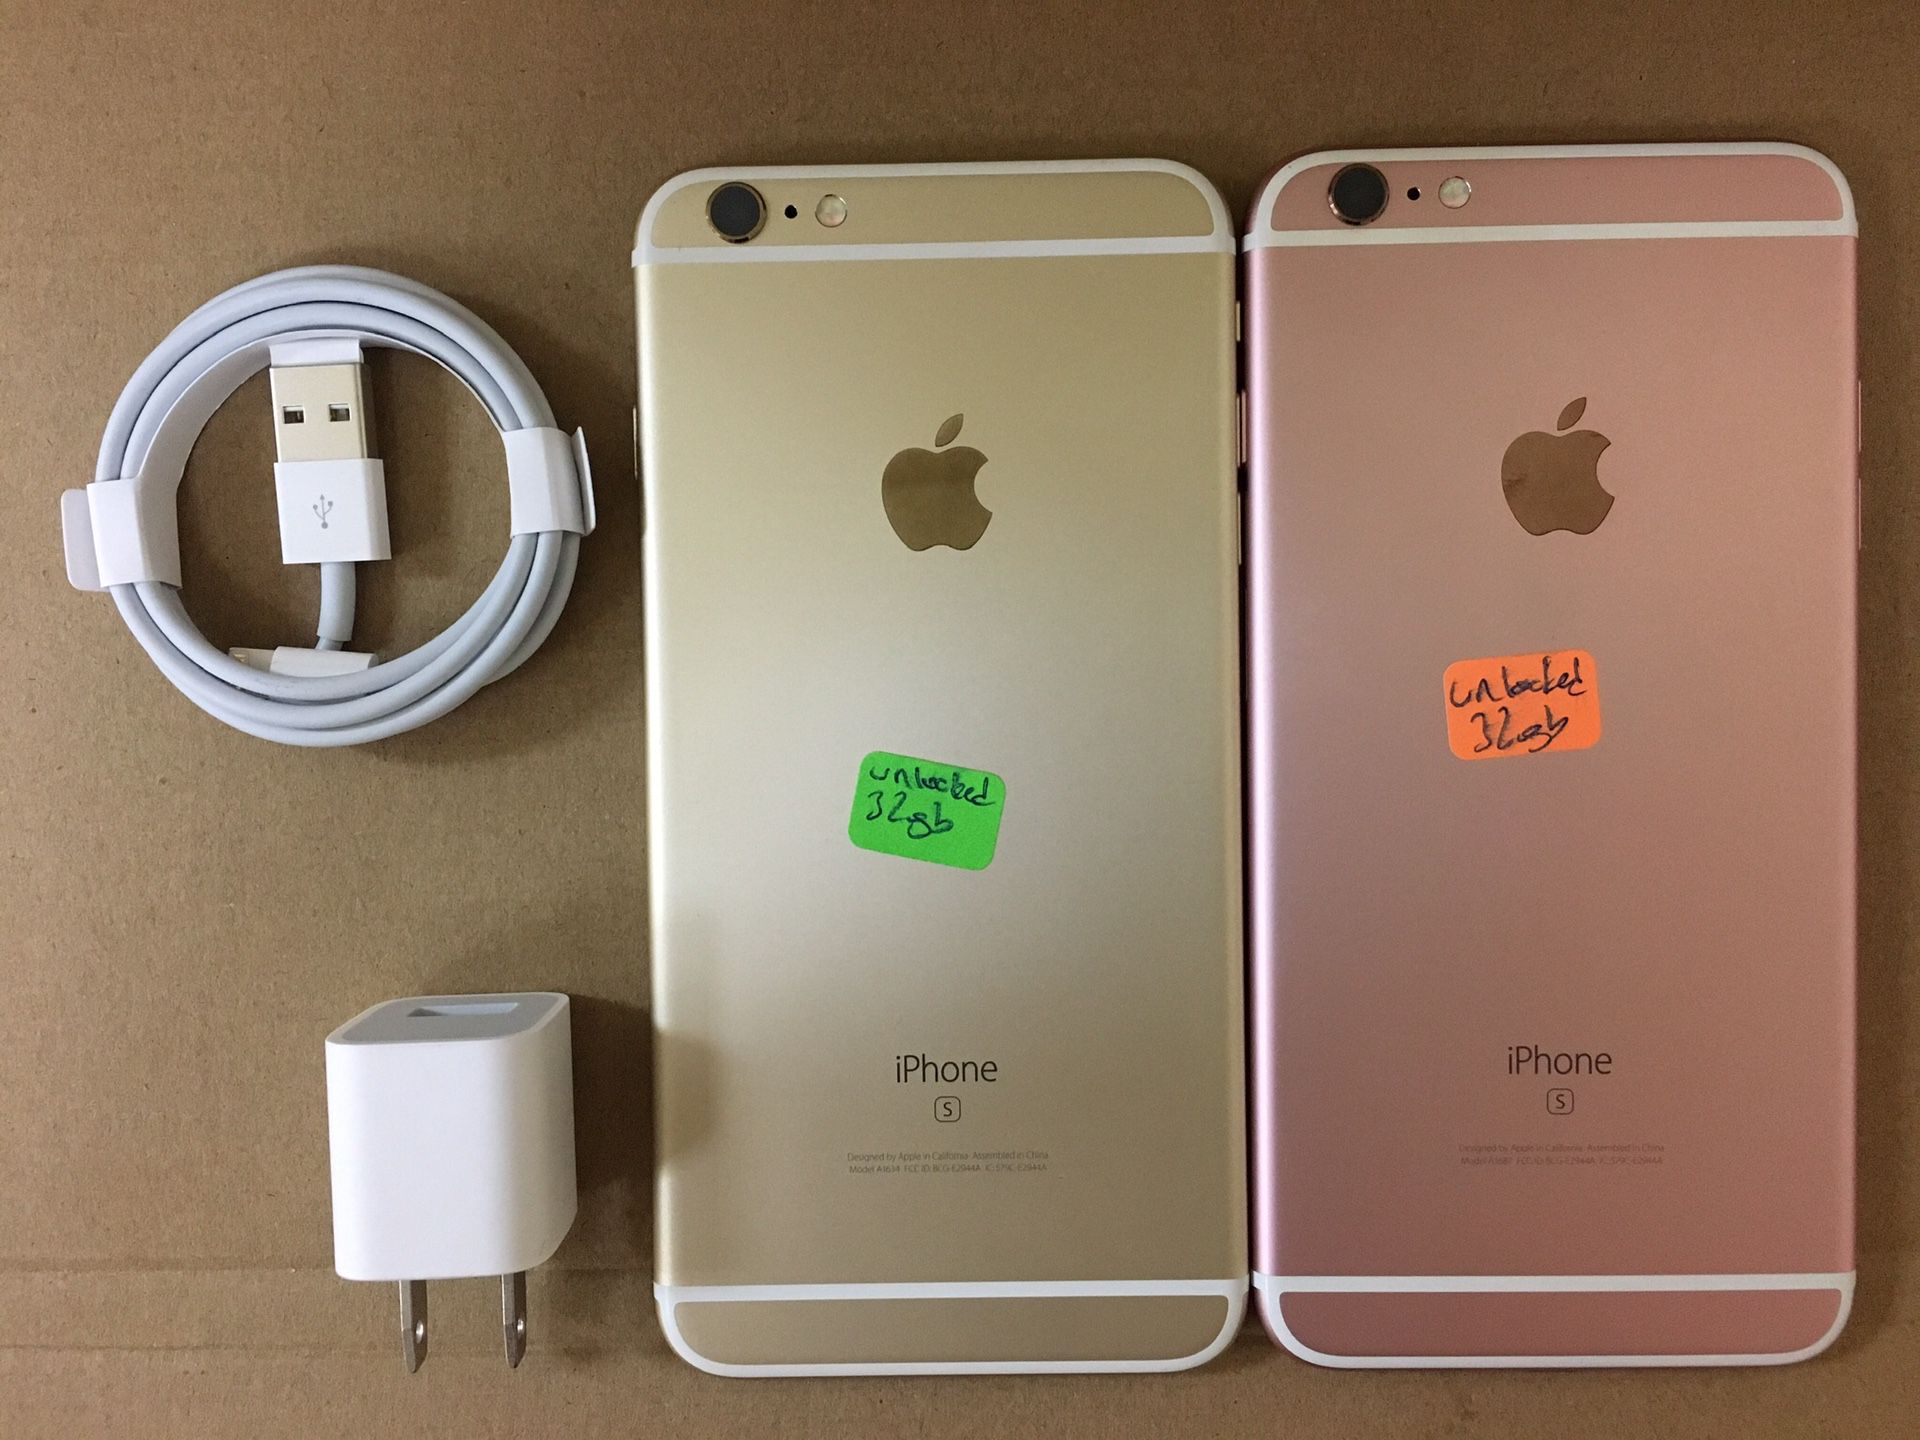 iPhone 6s Plus 32gb factory unlocked, iphone AT&T, T-Mobile,Cricket Metro pcs, Verizon, Straight talk Simple mobile, unlocked, iphone